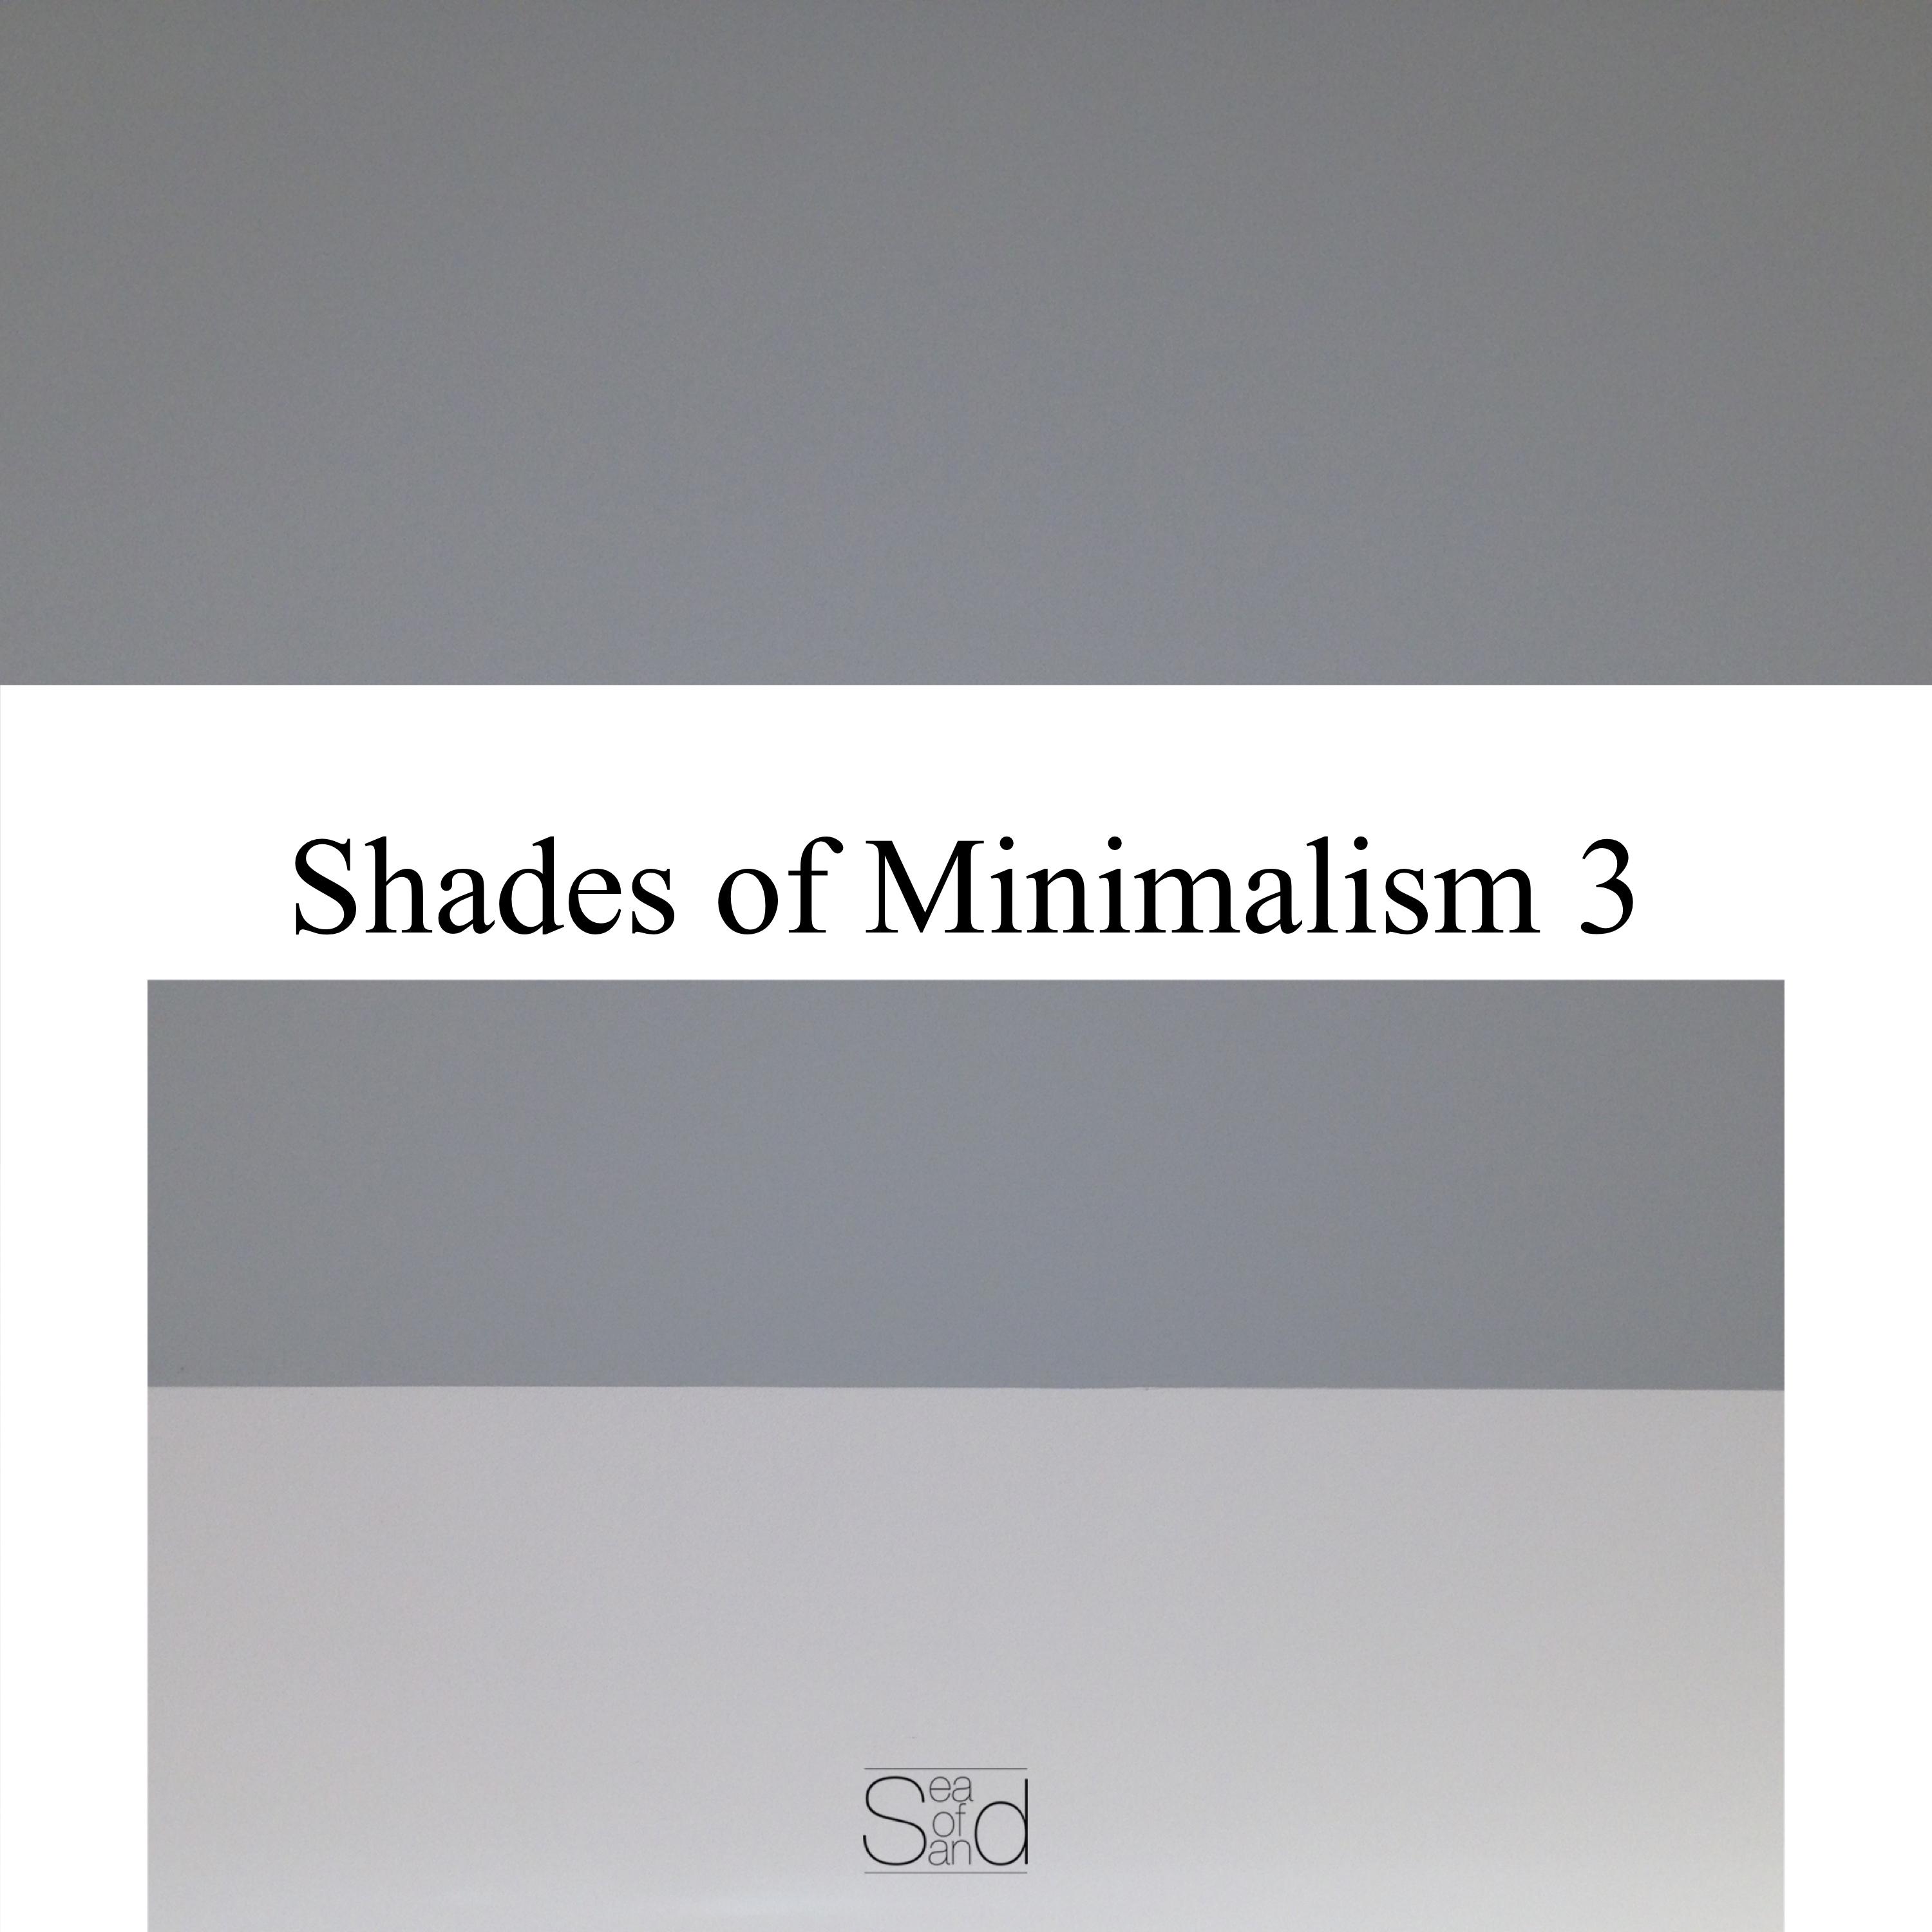 Shades of Minimalism 3